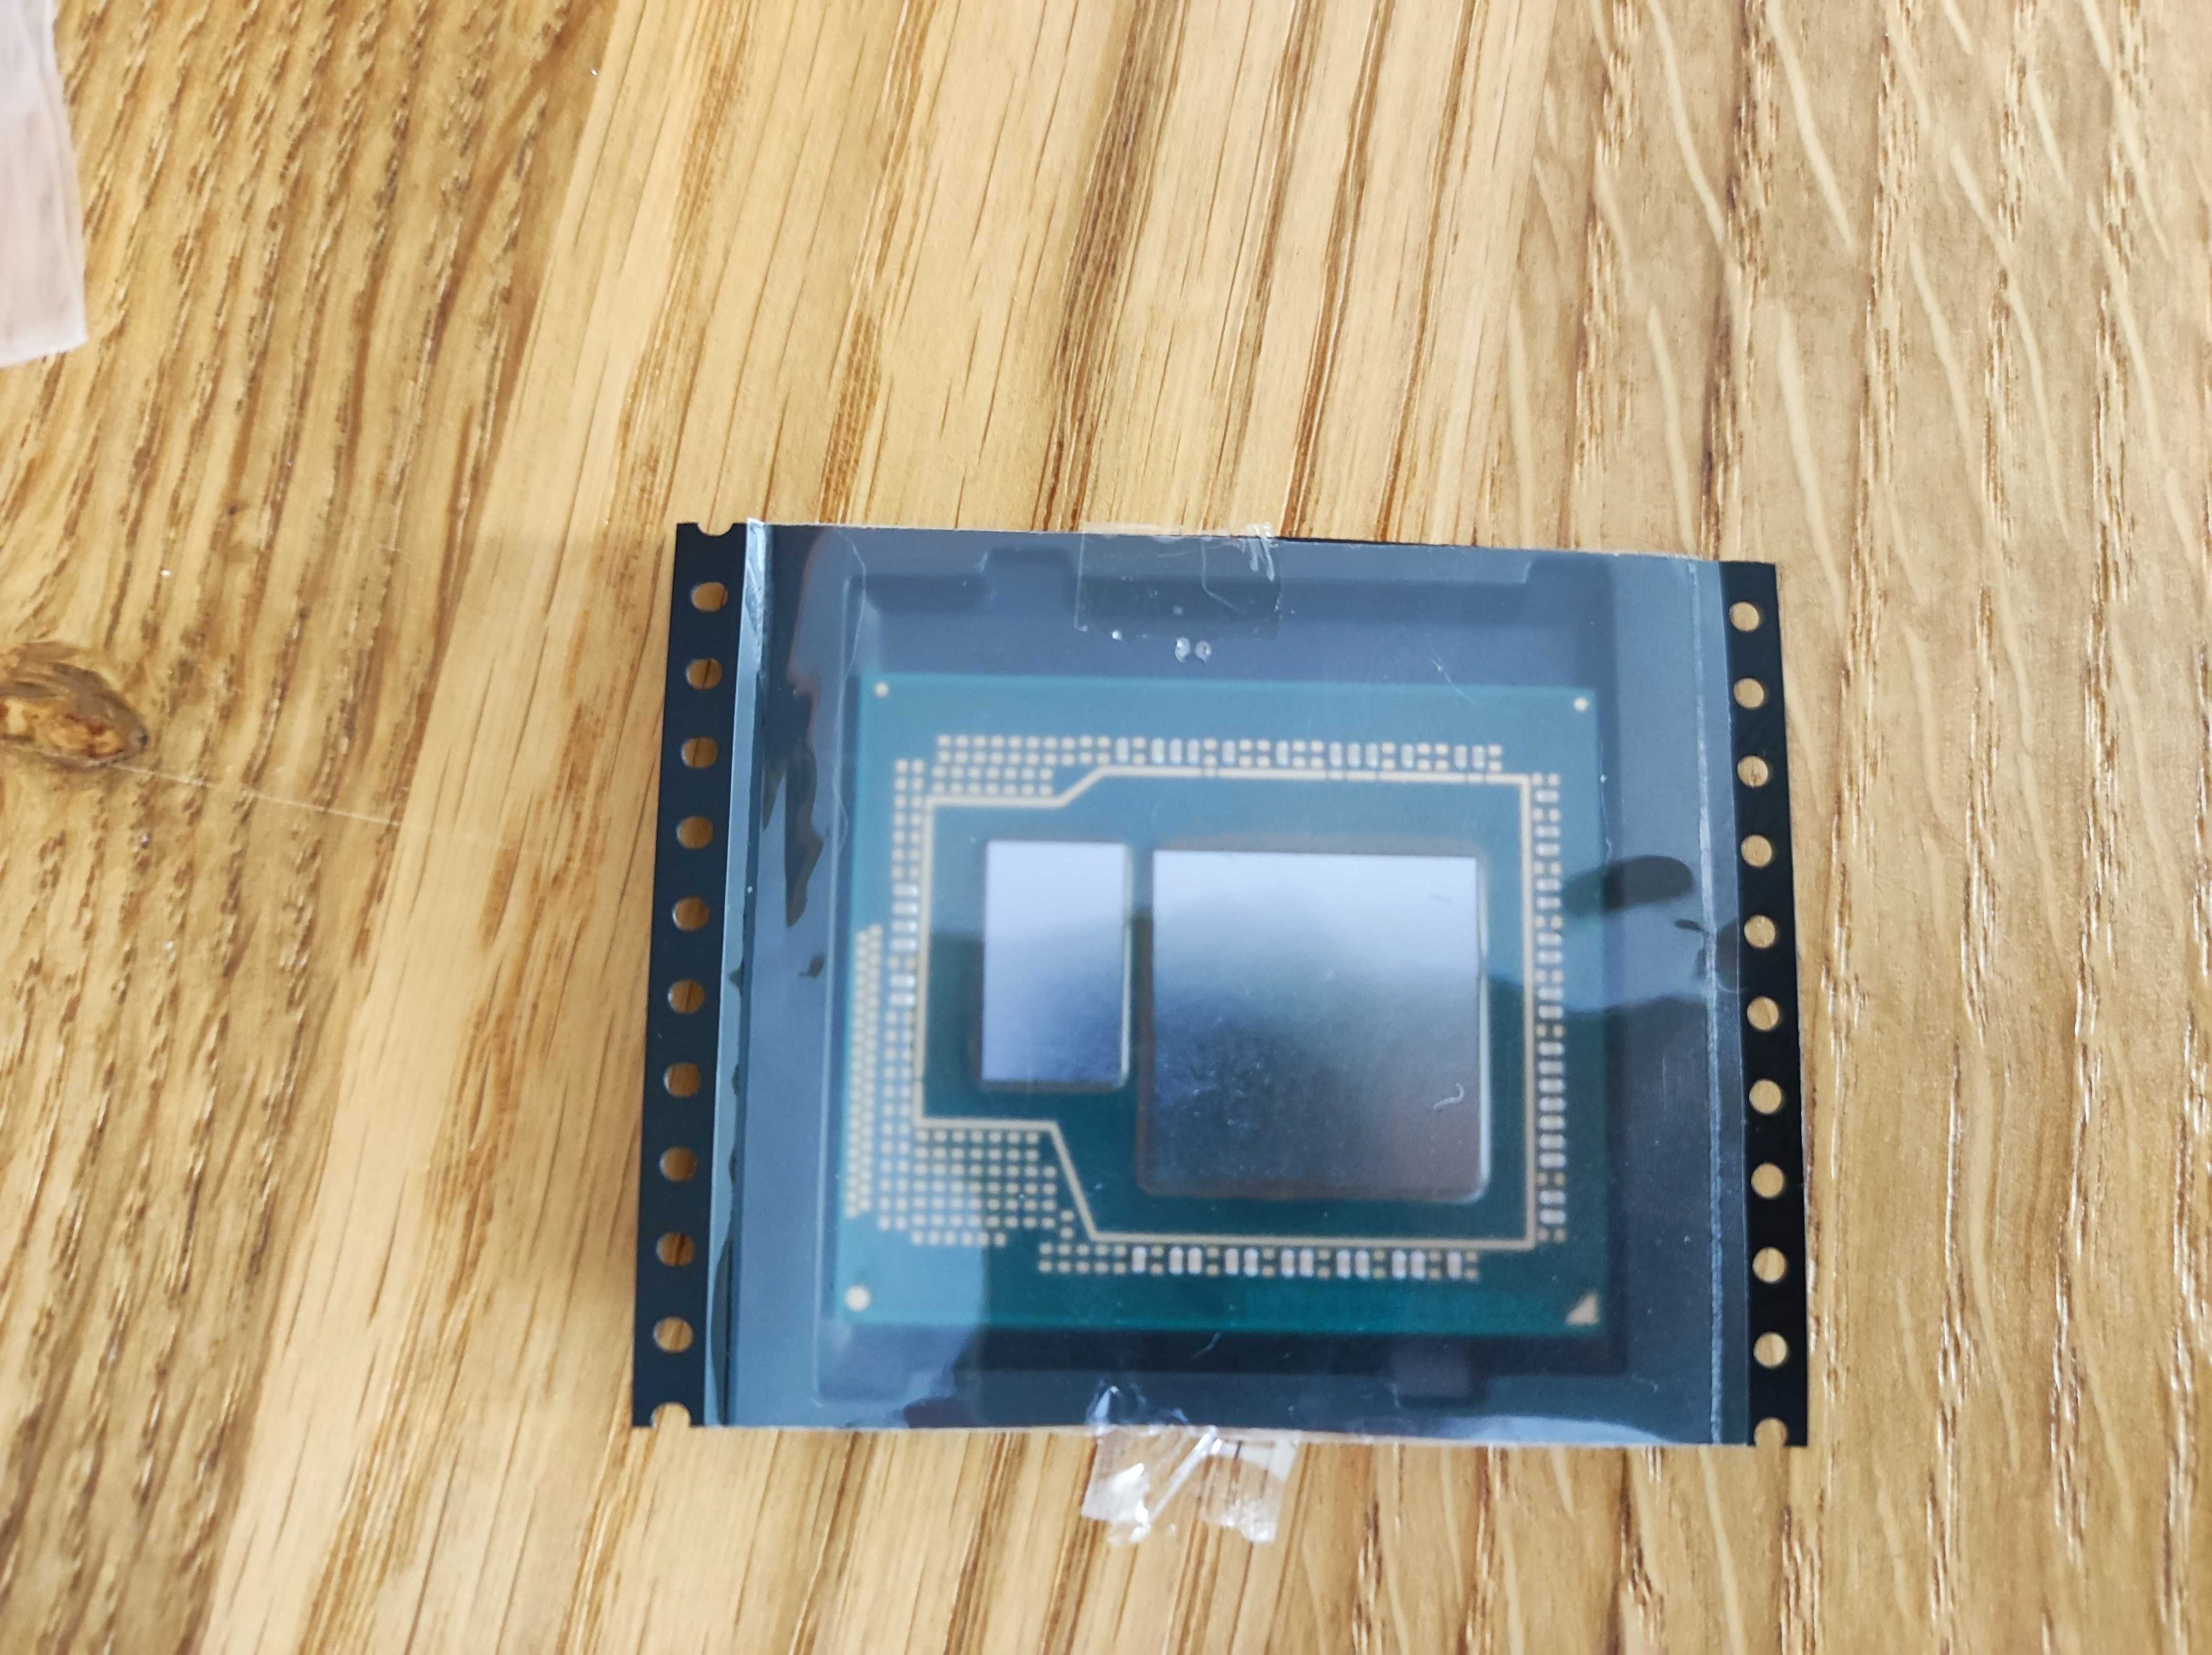 Procesor I7-4980HQ SR1ZY reball BGA chipset